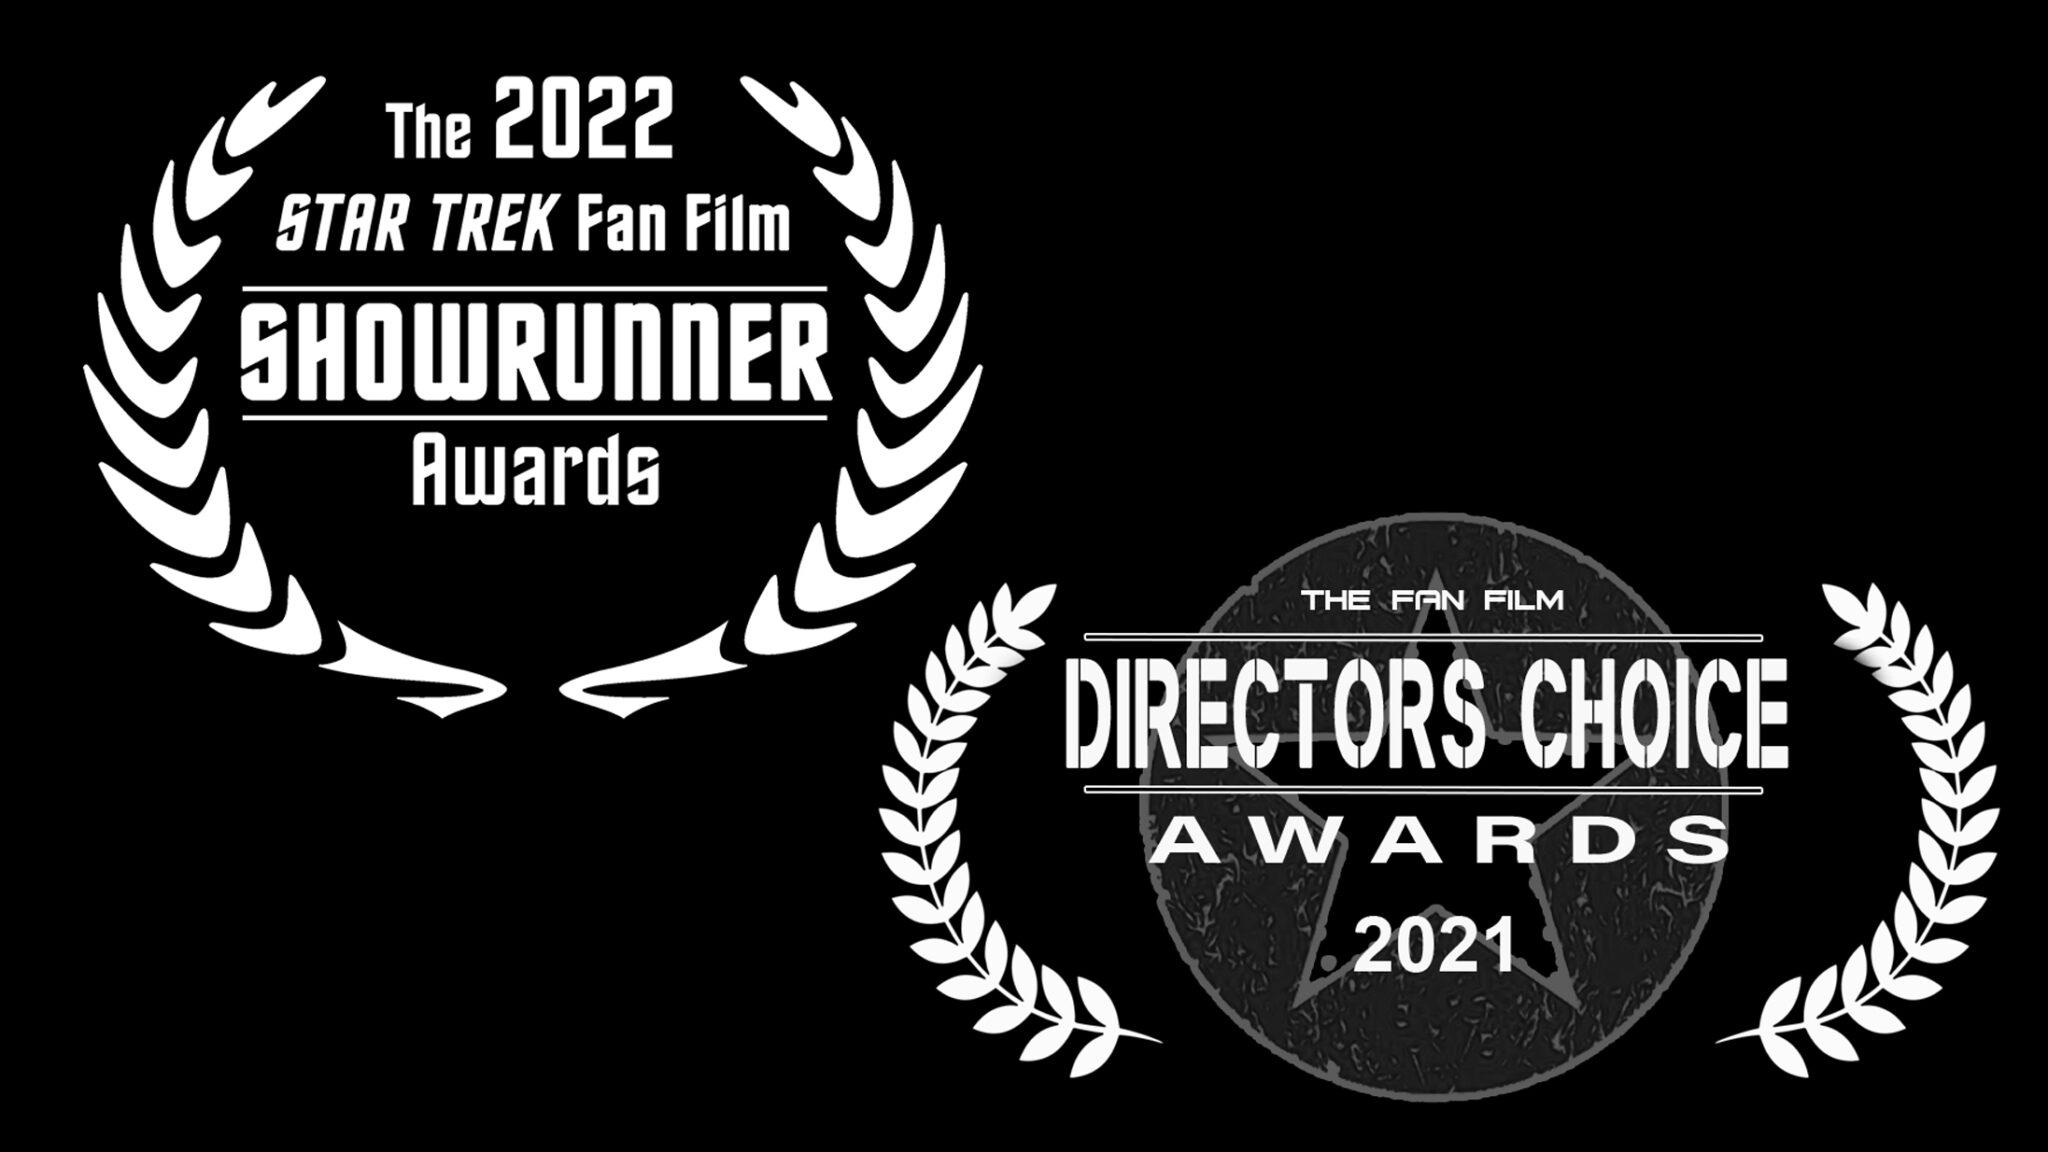 Announcing TWO new FAN FILM AWARD SHOWS coming in 2022! Fan Film Factor